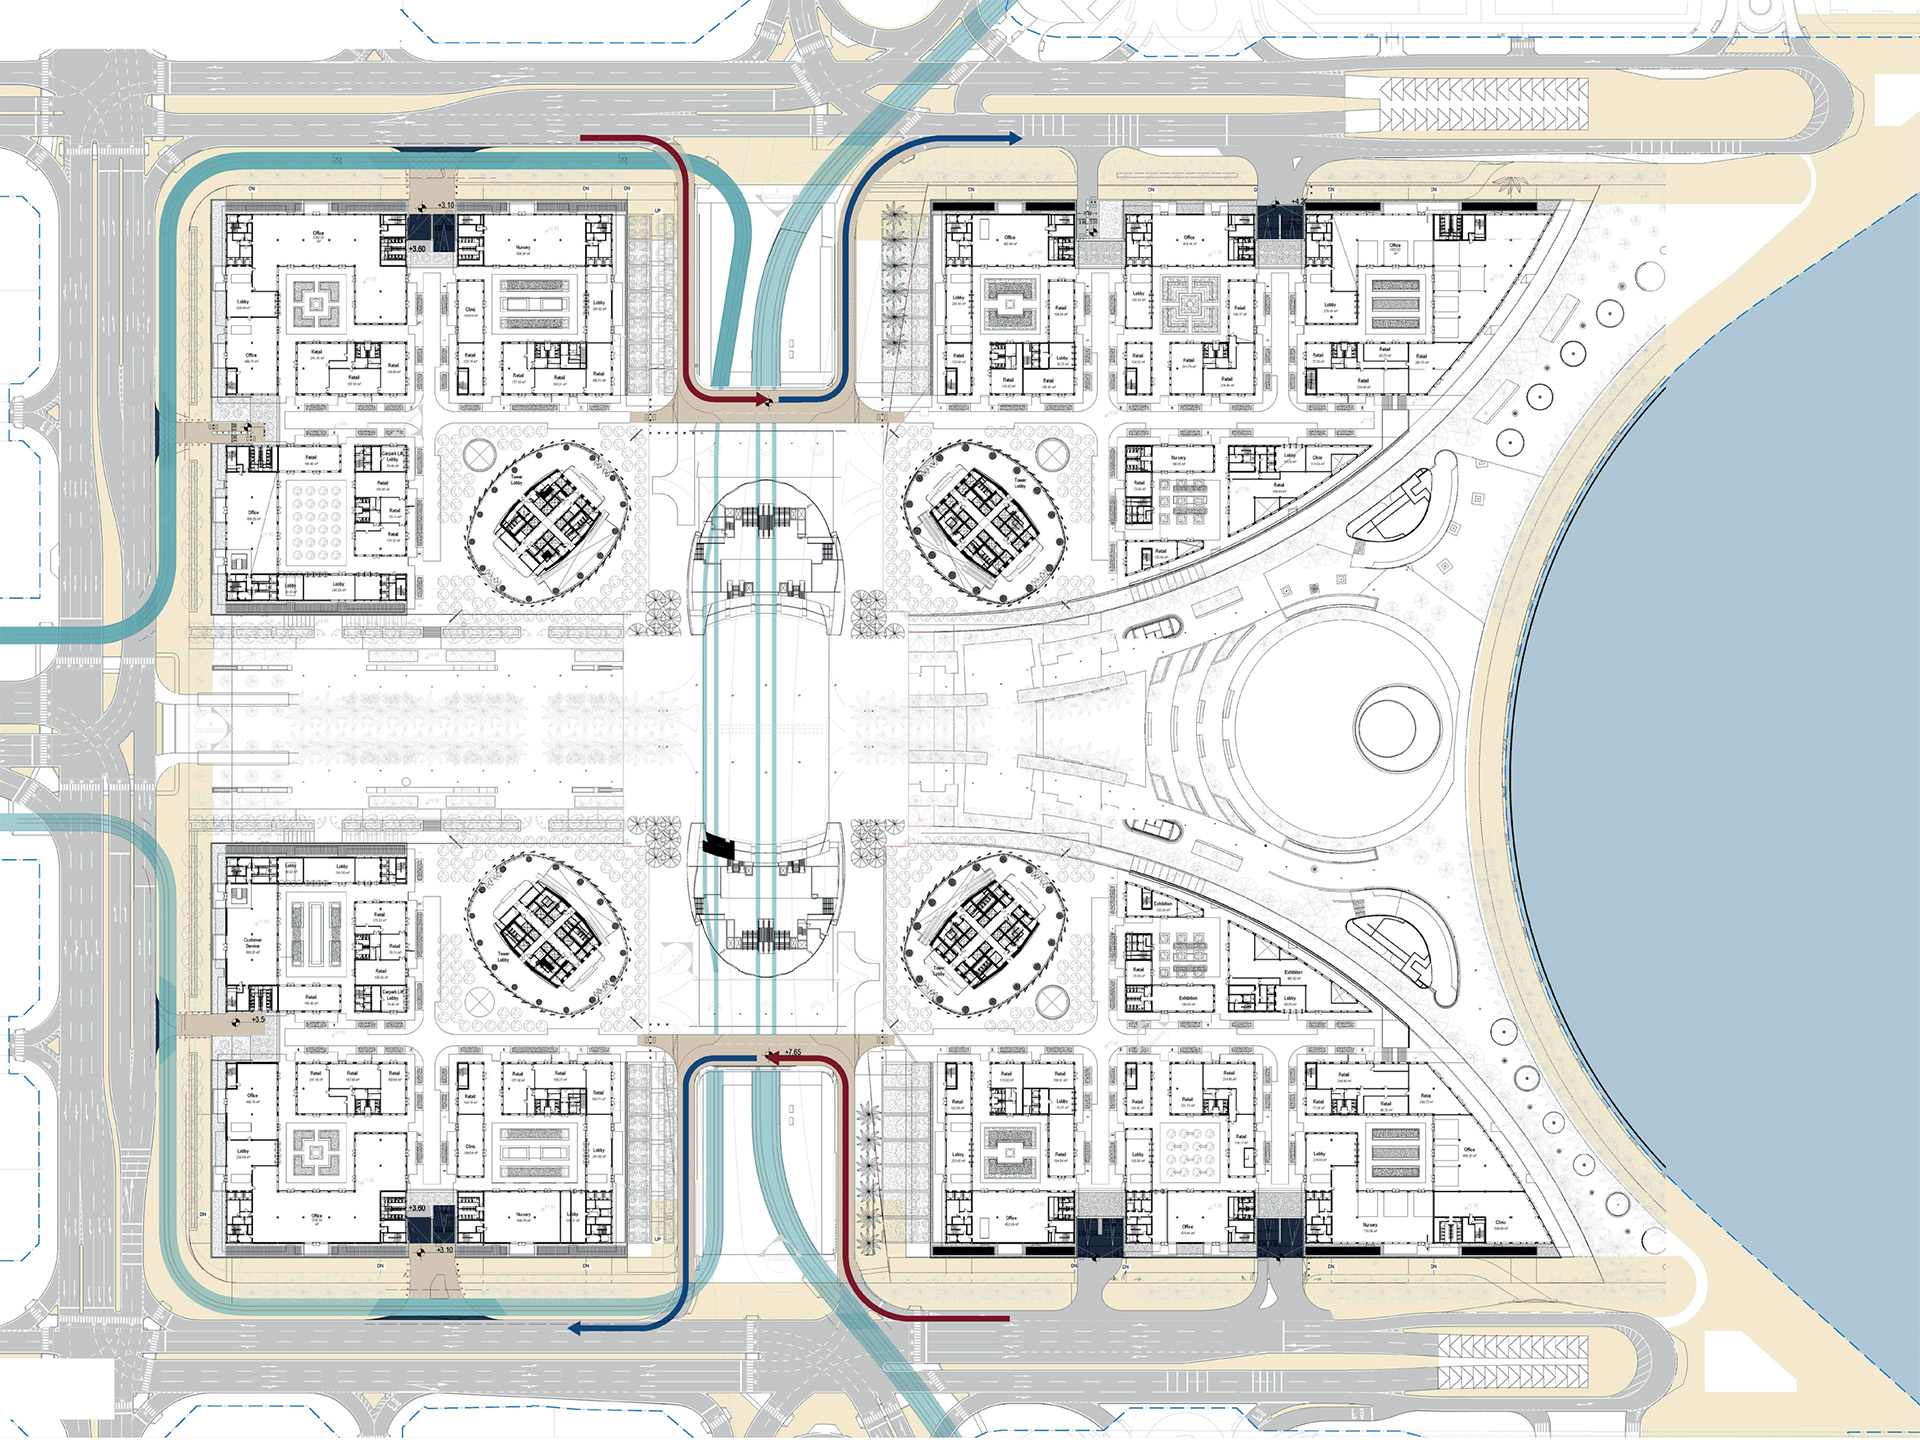 Plan of Plaza level